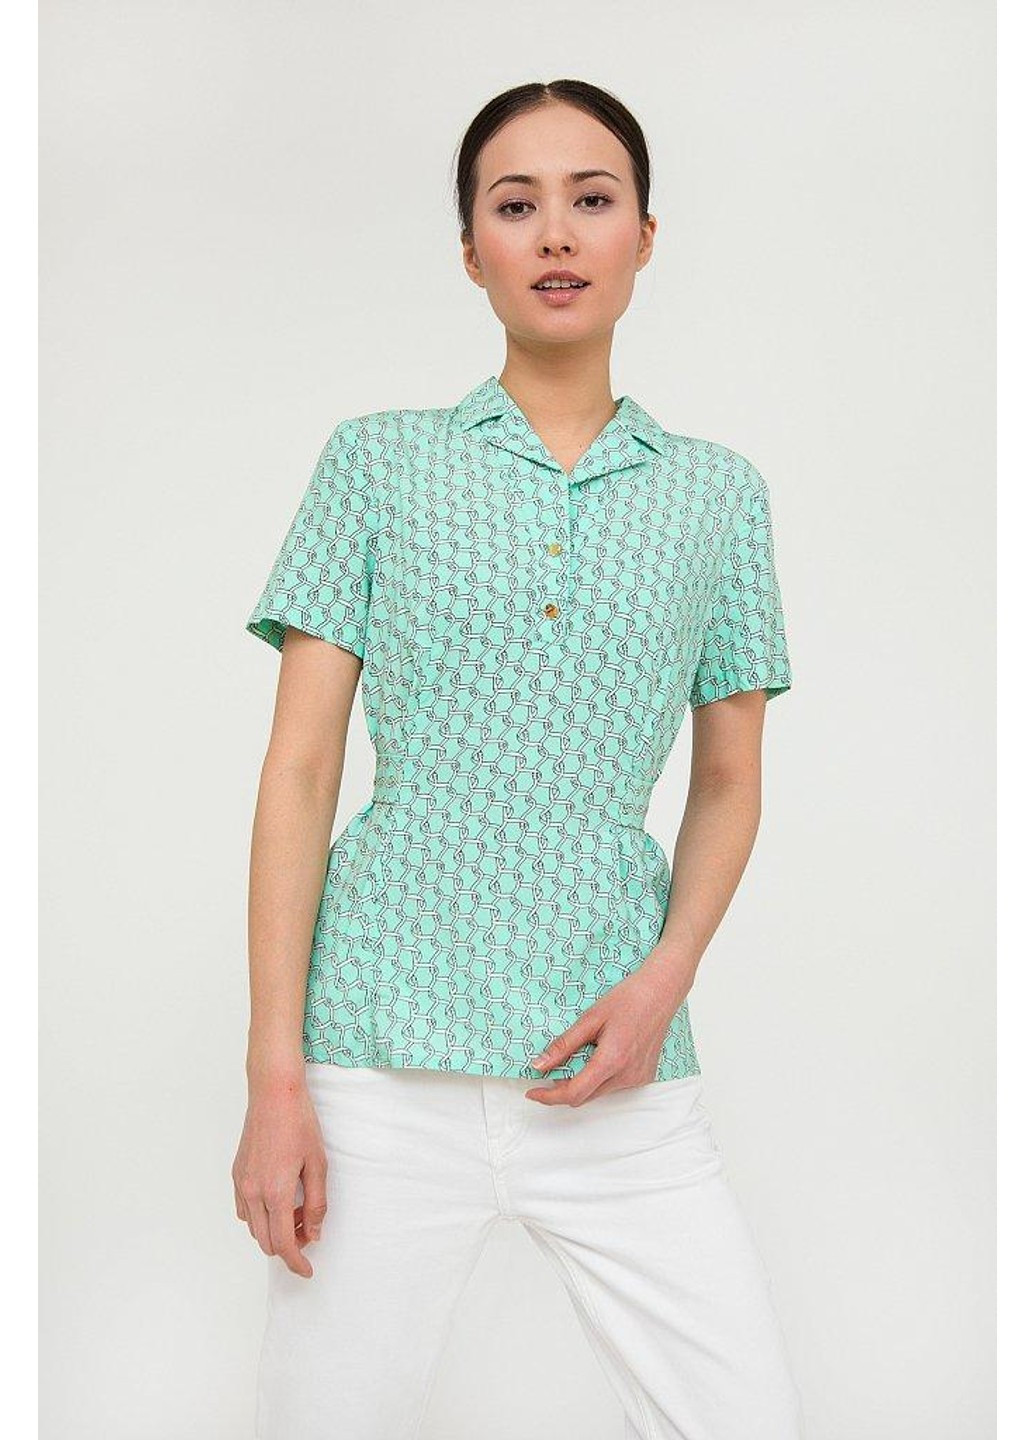 Бірюзова блуза s20-11063-915 Finn Flare